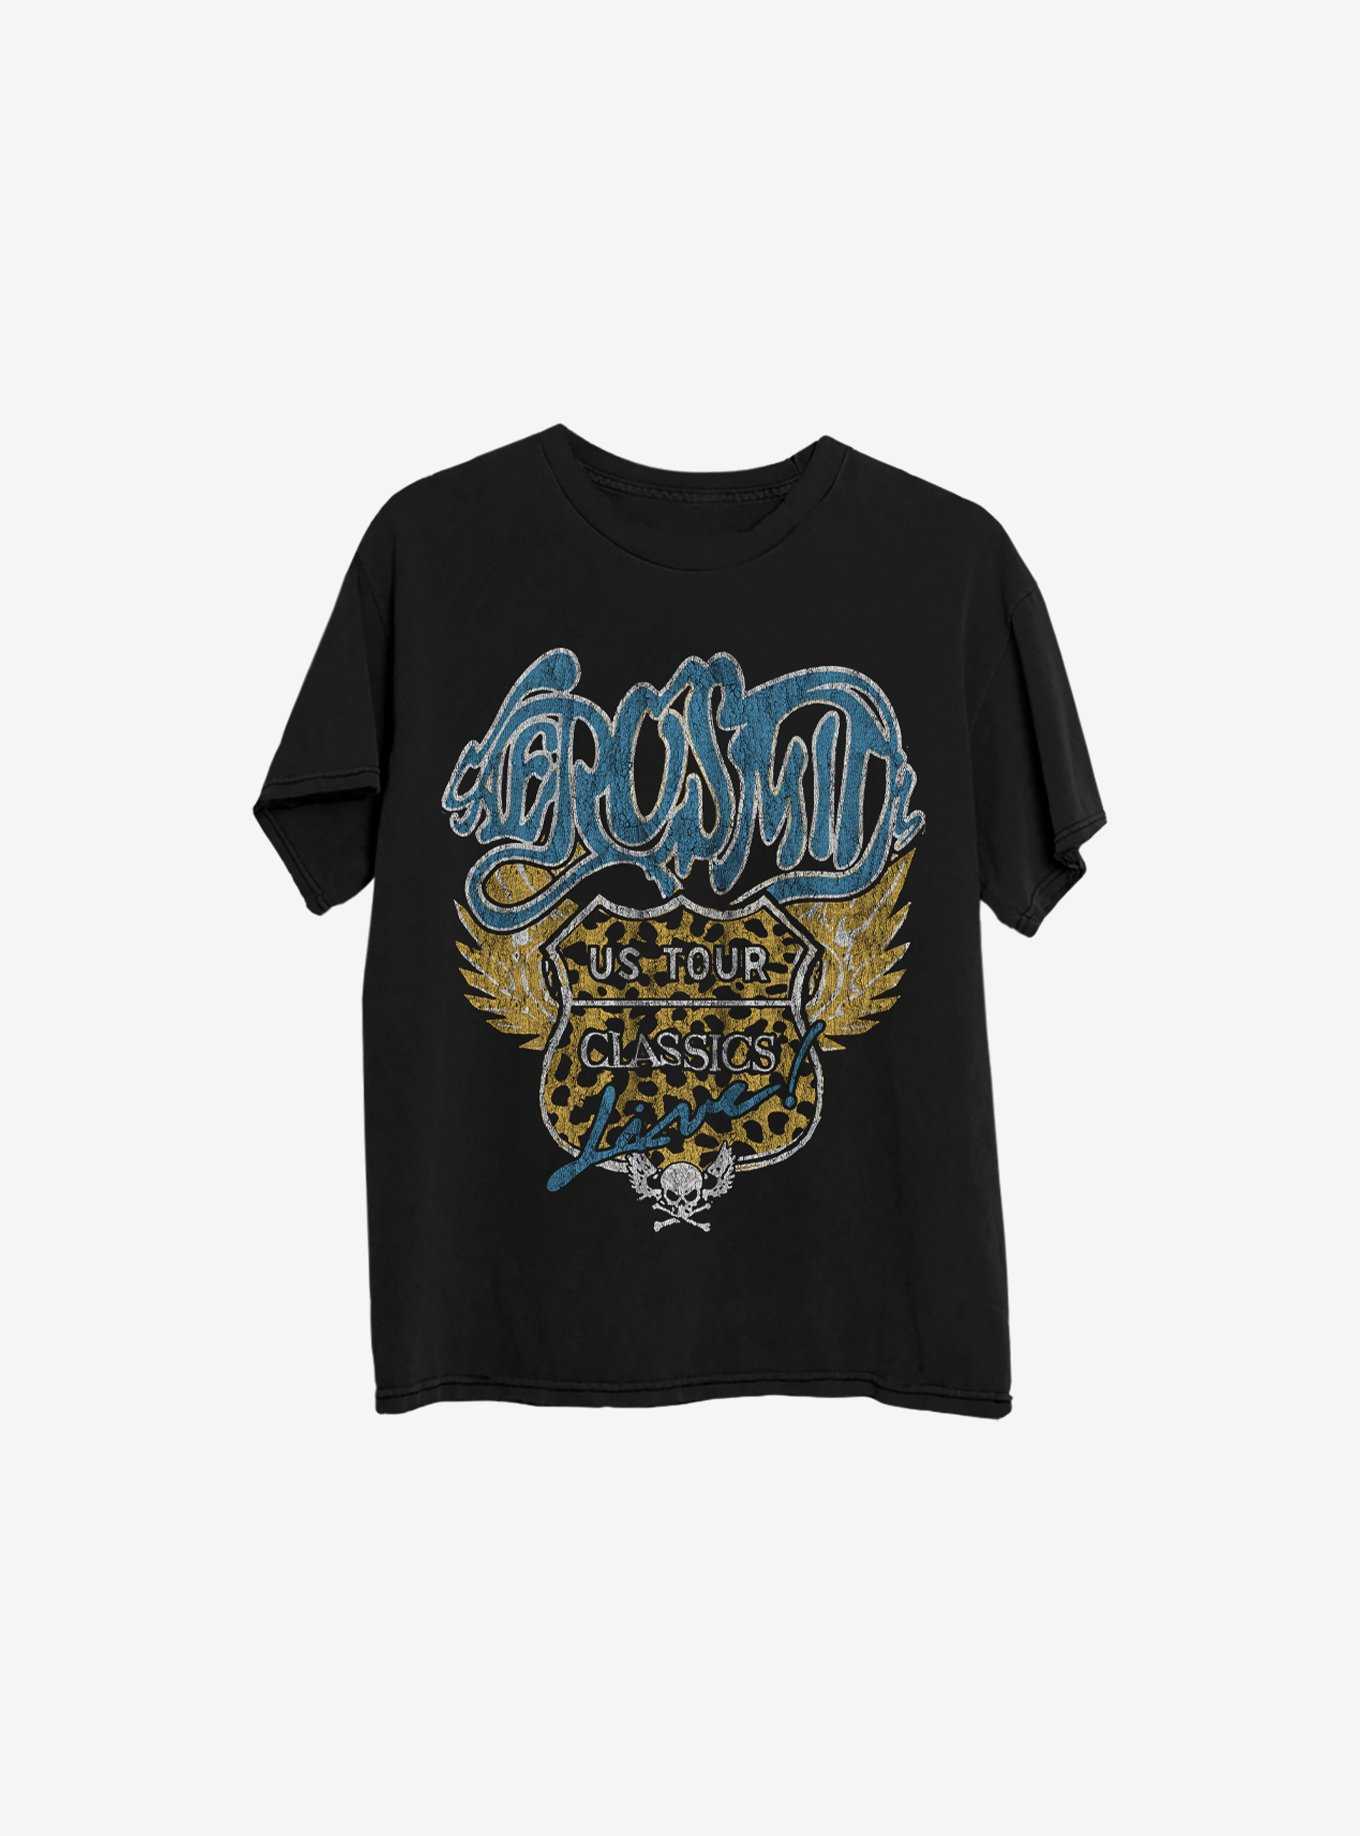 Aerosmith US Tour Classic Live T-Shirt, BLACK, hi-res